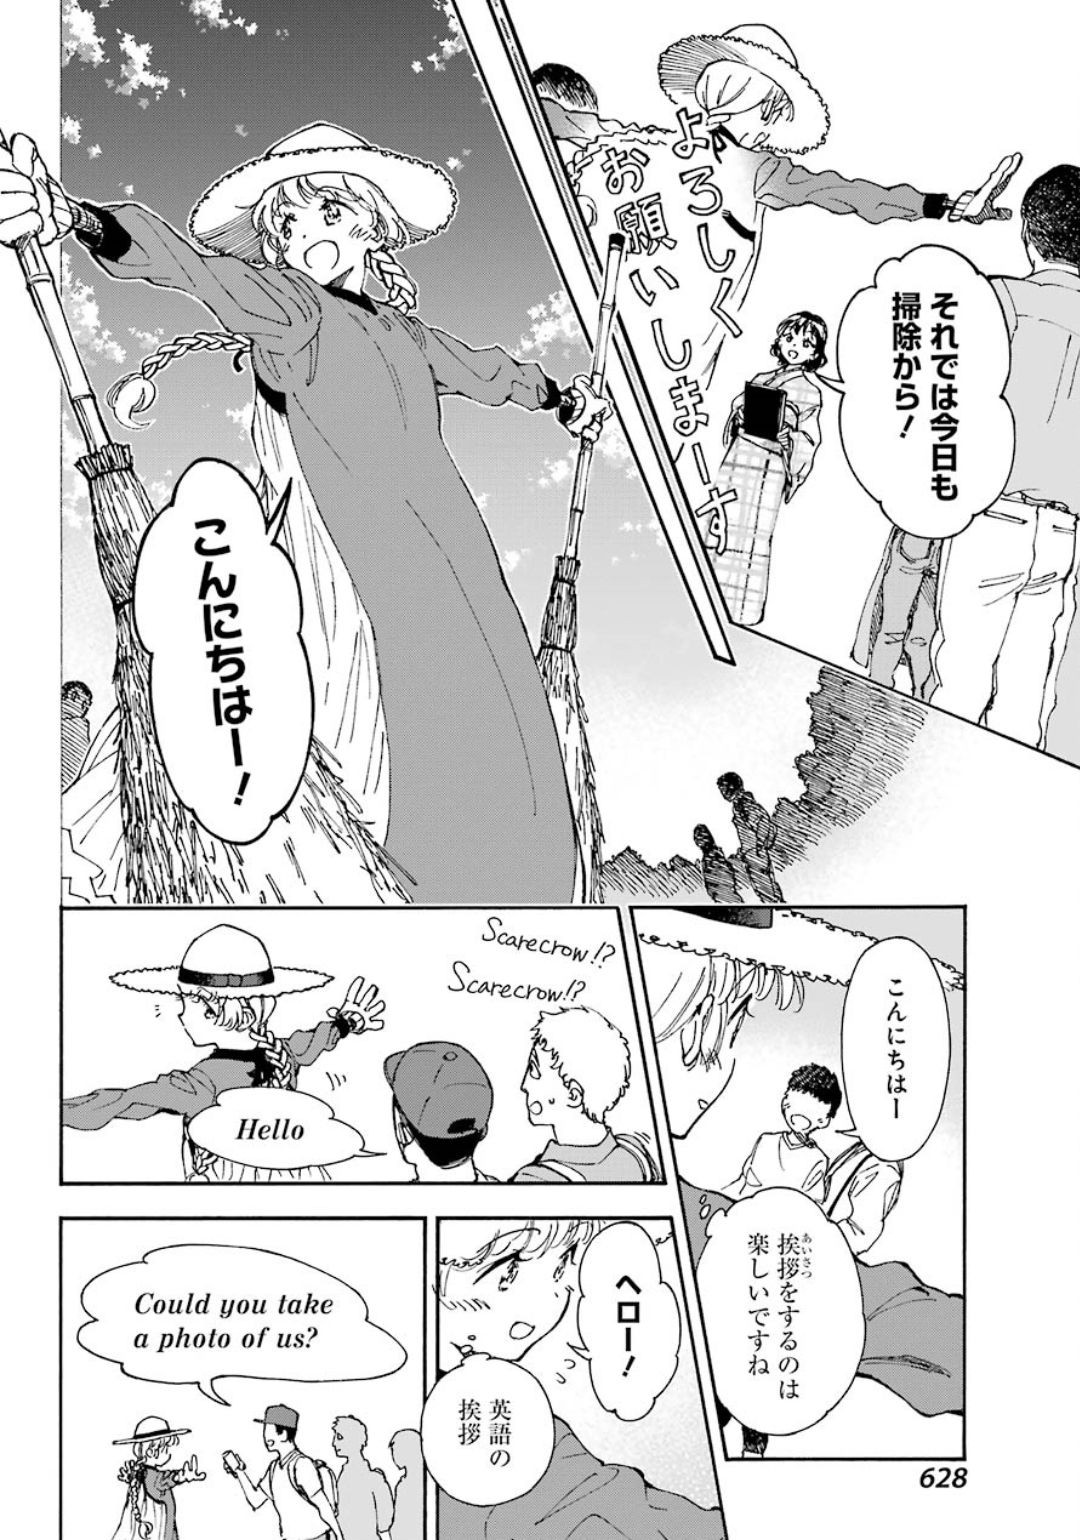 Hotomeku-kakashi - Chapter 04-1 - Page 14